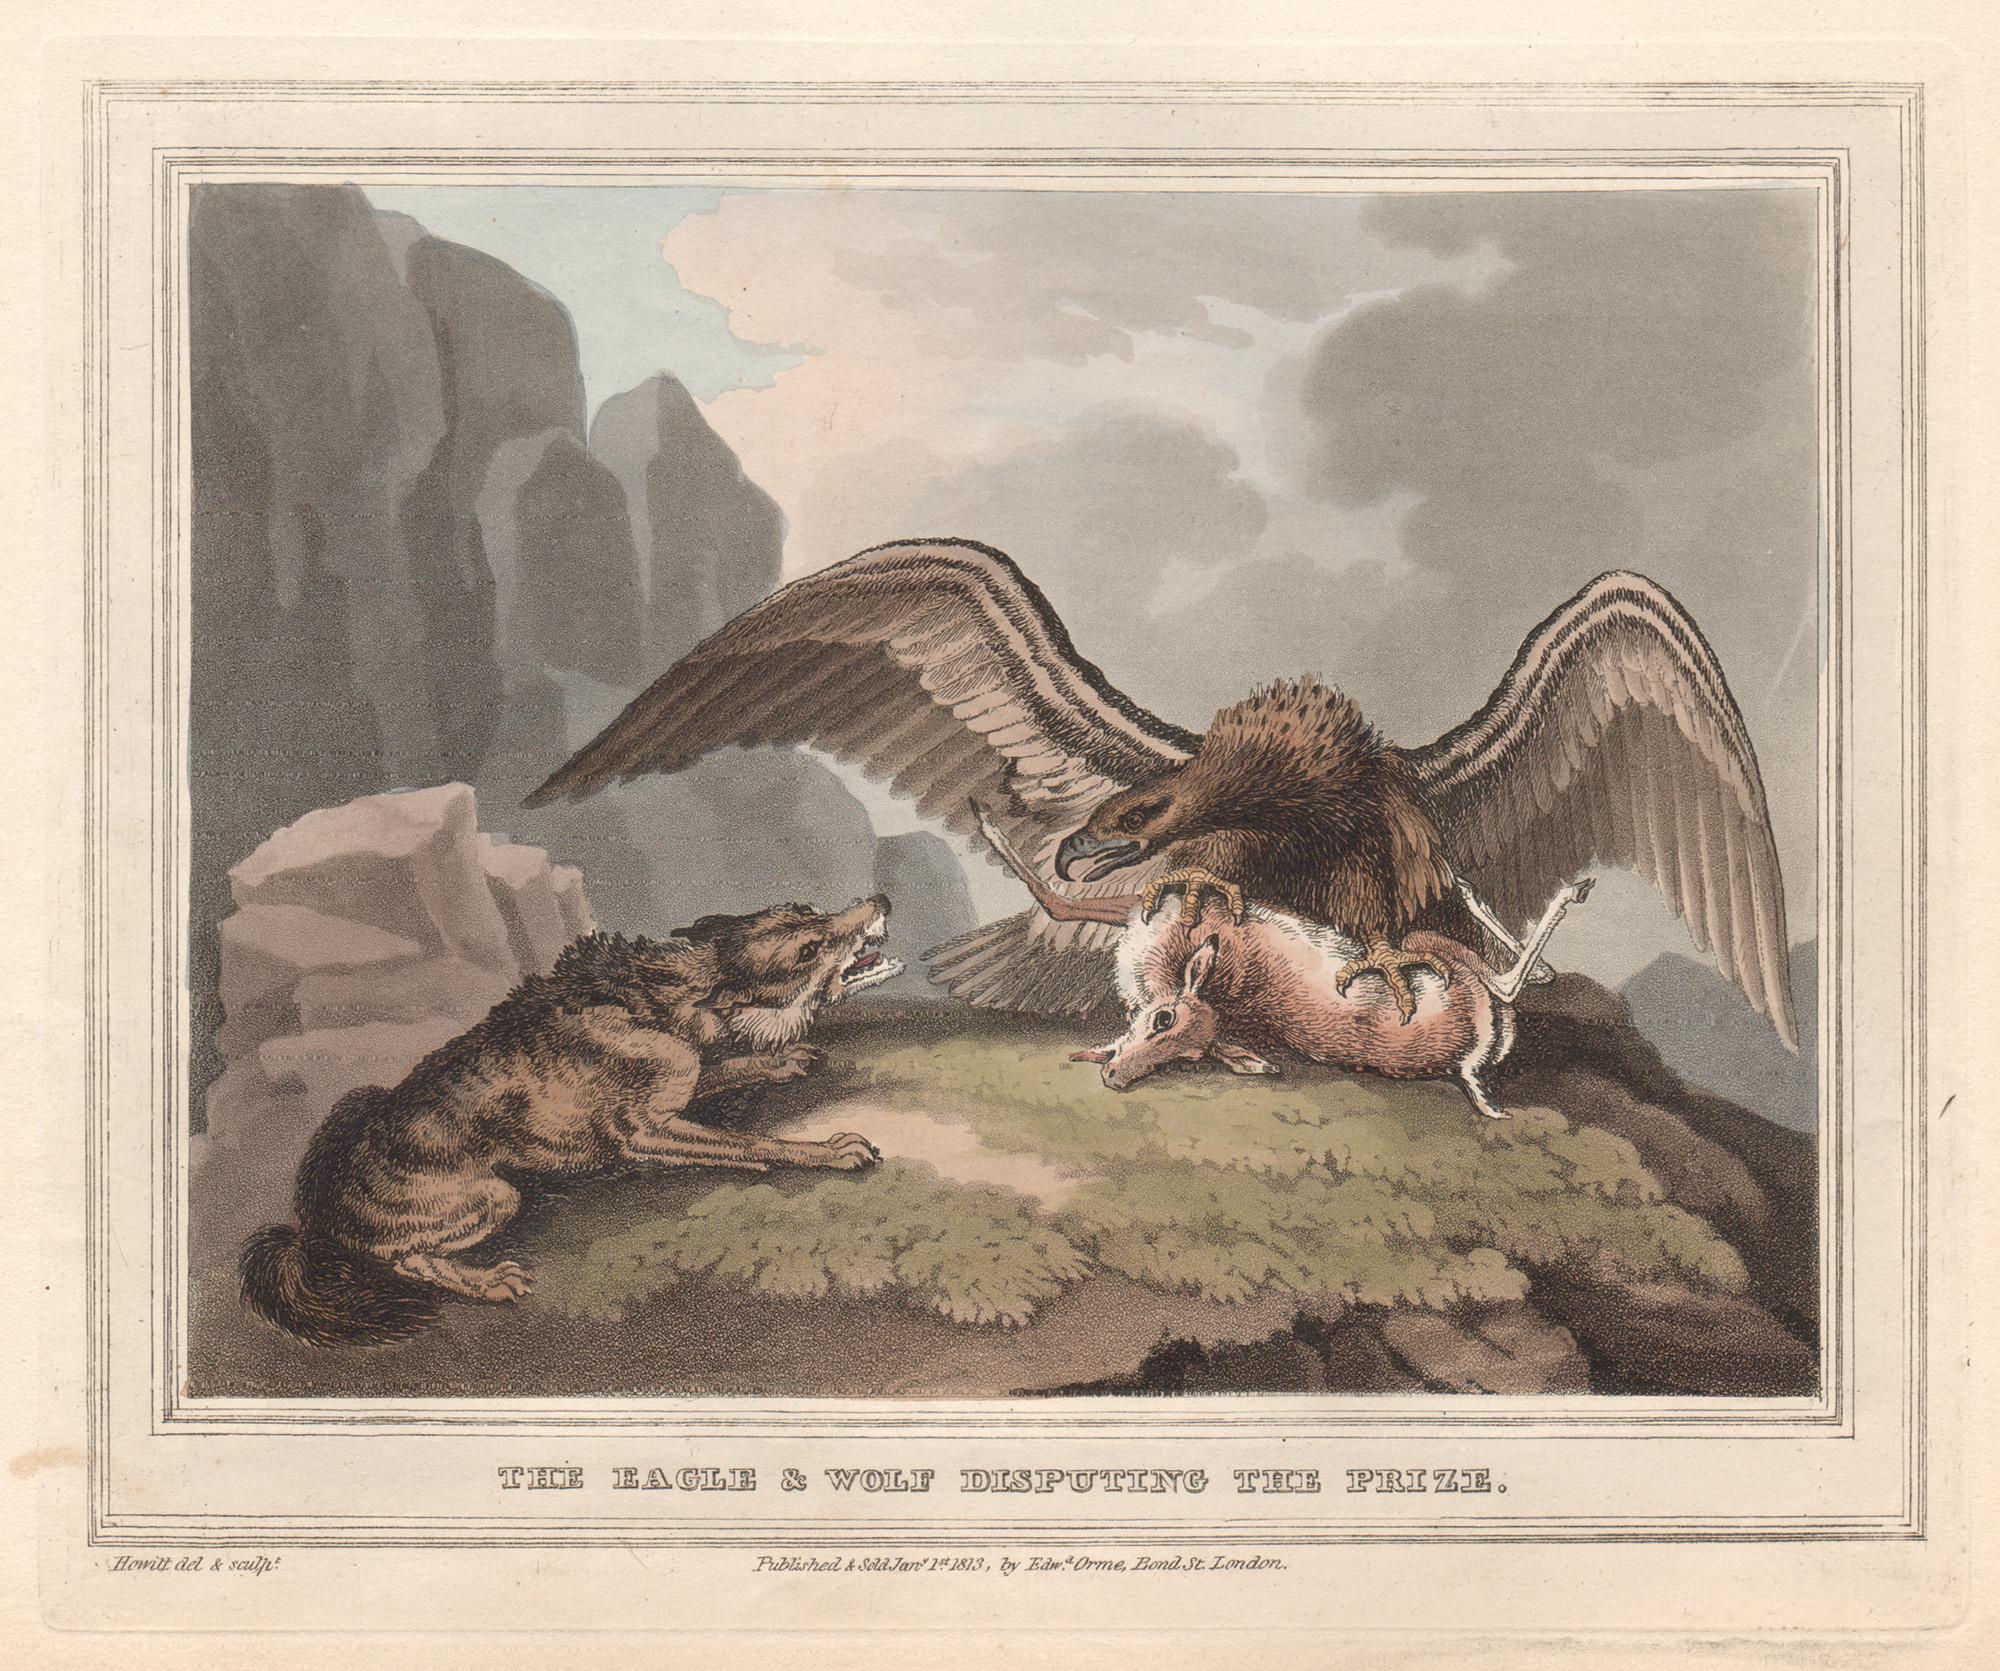 Samuel Howitt Animal Print - The Eagle & Wolf Disputing the Prize, aquatint engraving hunting print, 1813